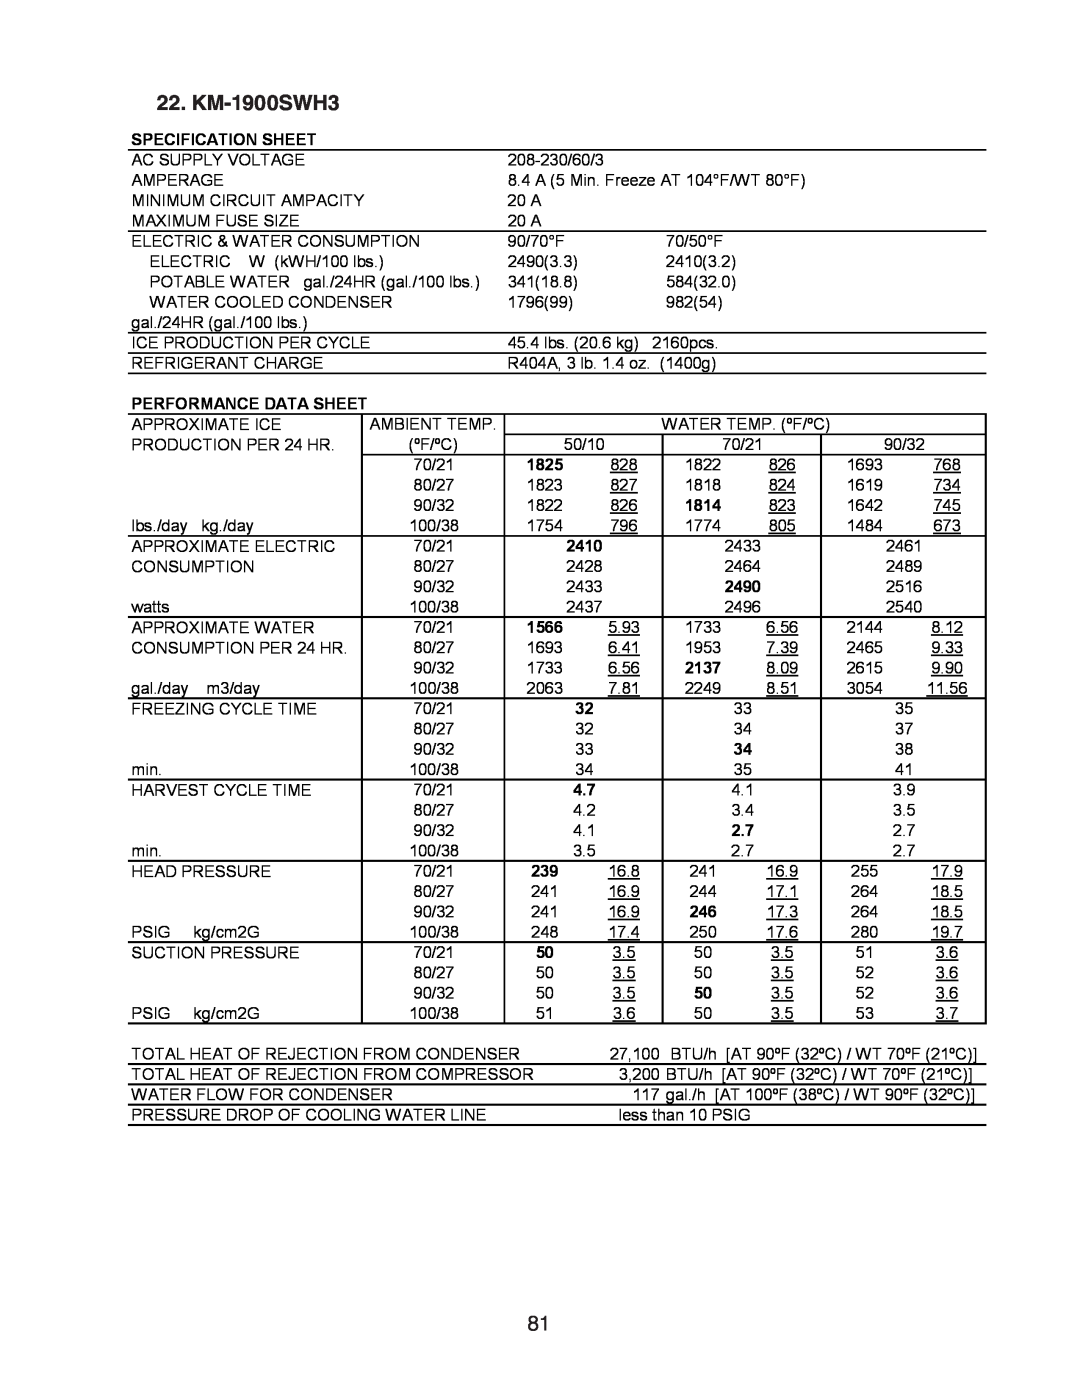 Hoshizaki SRH/3 KM-2100SWH3, KM-1301SAH/3 KM-1900SWH3, Specification Sheet, Performance Data Sheet, 1814, 2490, 2137 